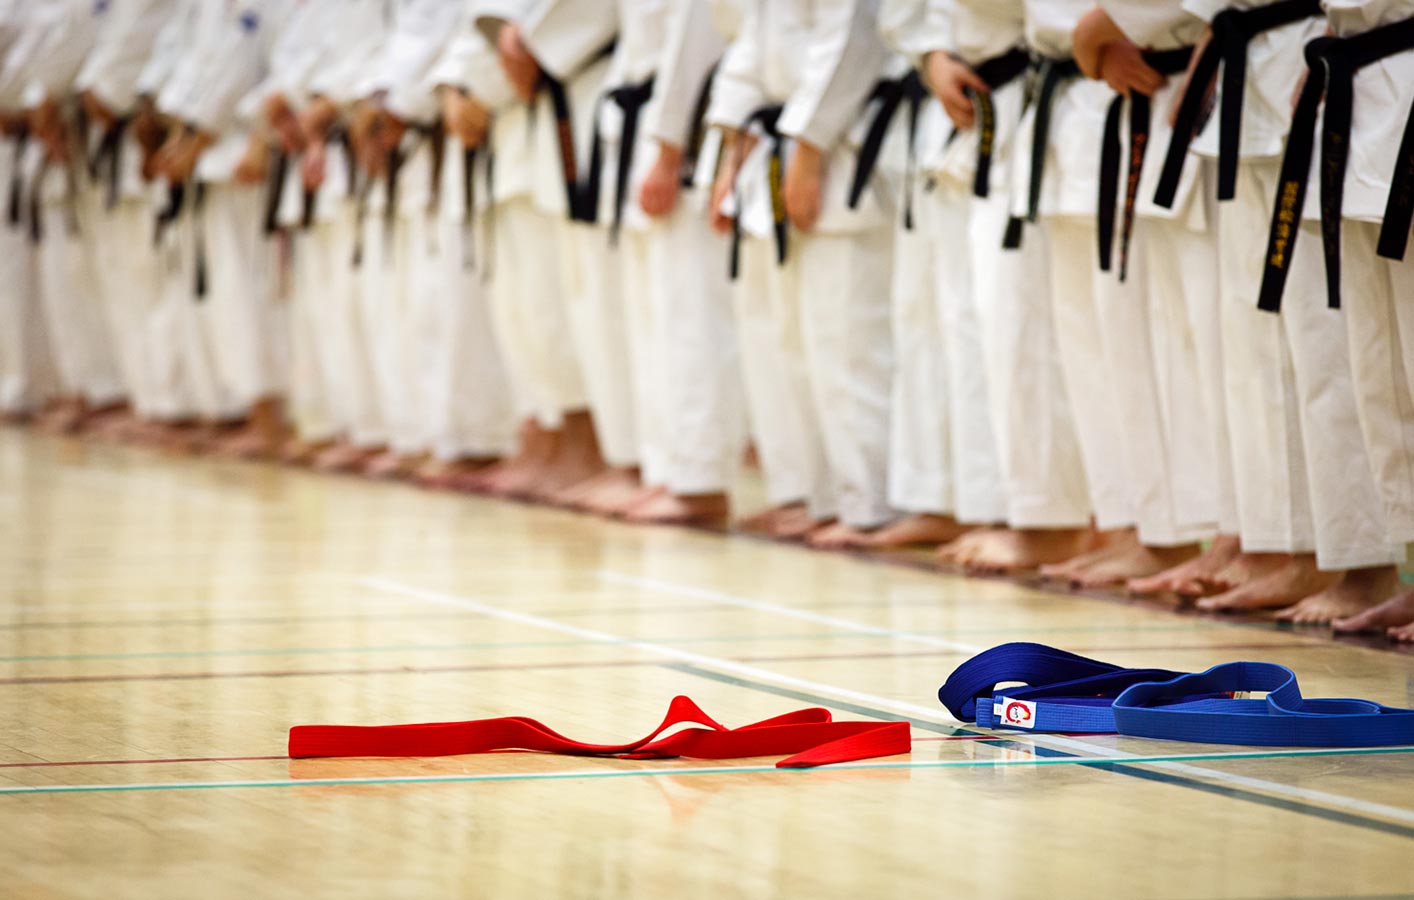 Competition de shotokan - Photographe de sport